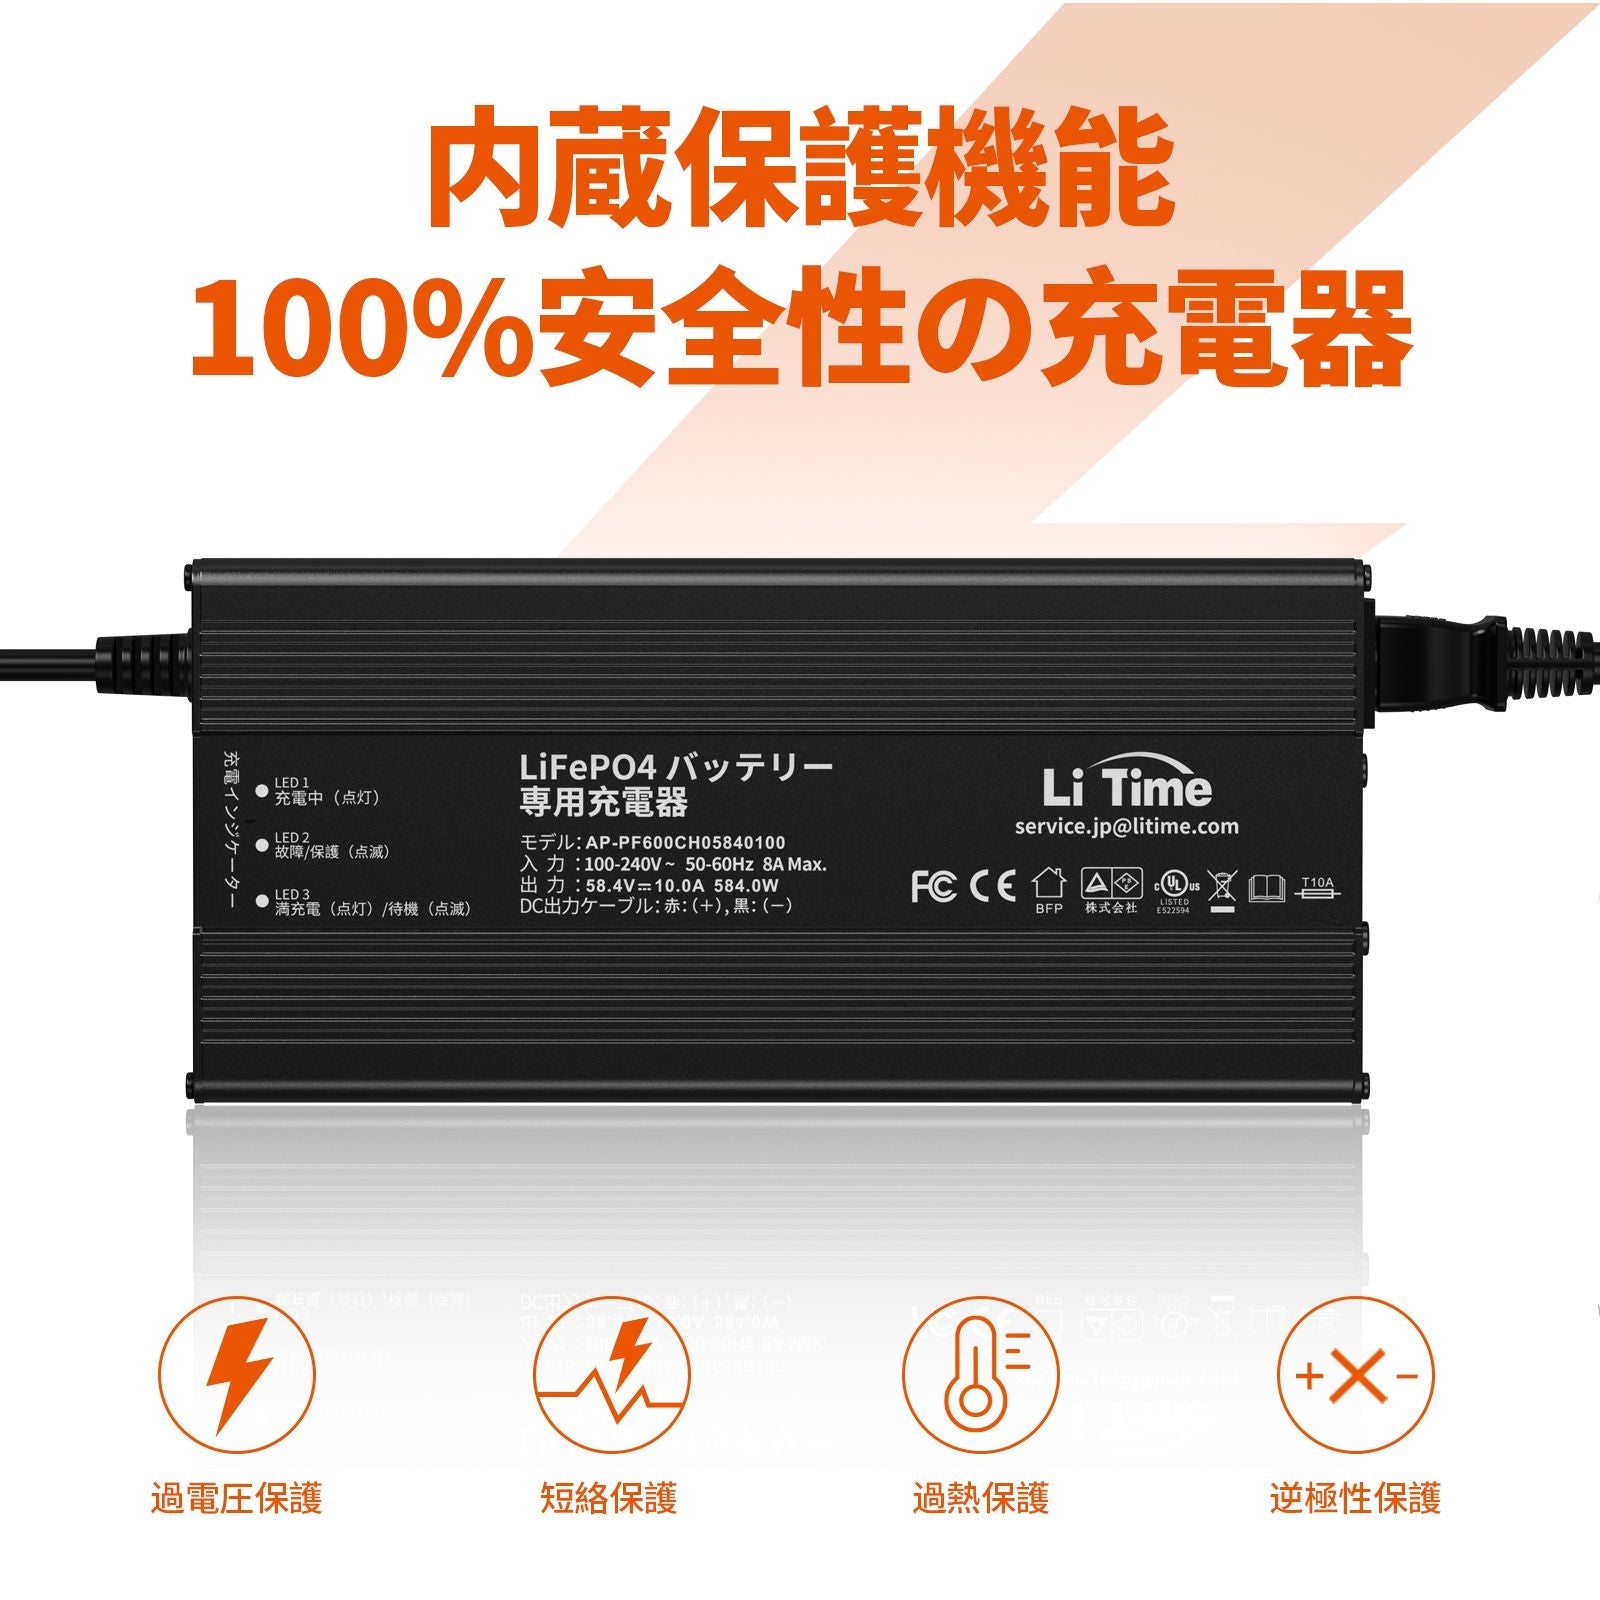 LiTime 58.4V 10Aリン酸鉄リチウムバッテリー専用・速い充電器 48V(51.2V) バッテリー適用 LiTime-JP